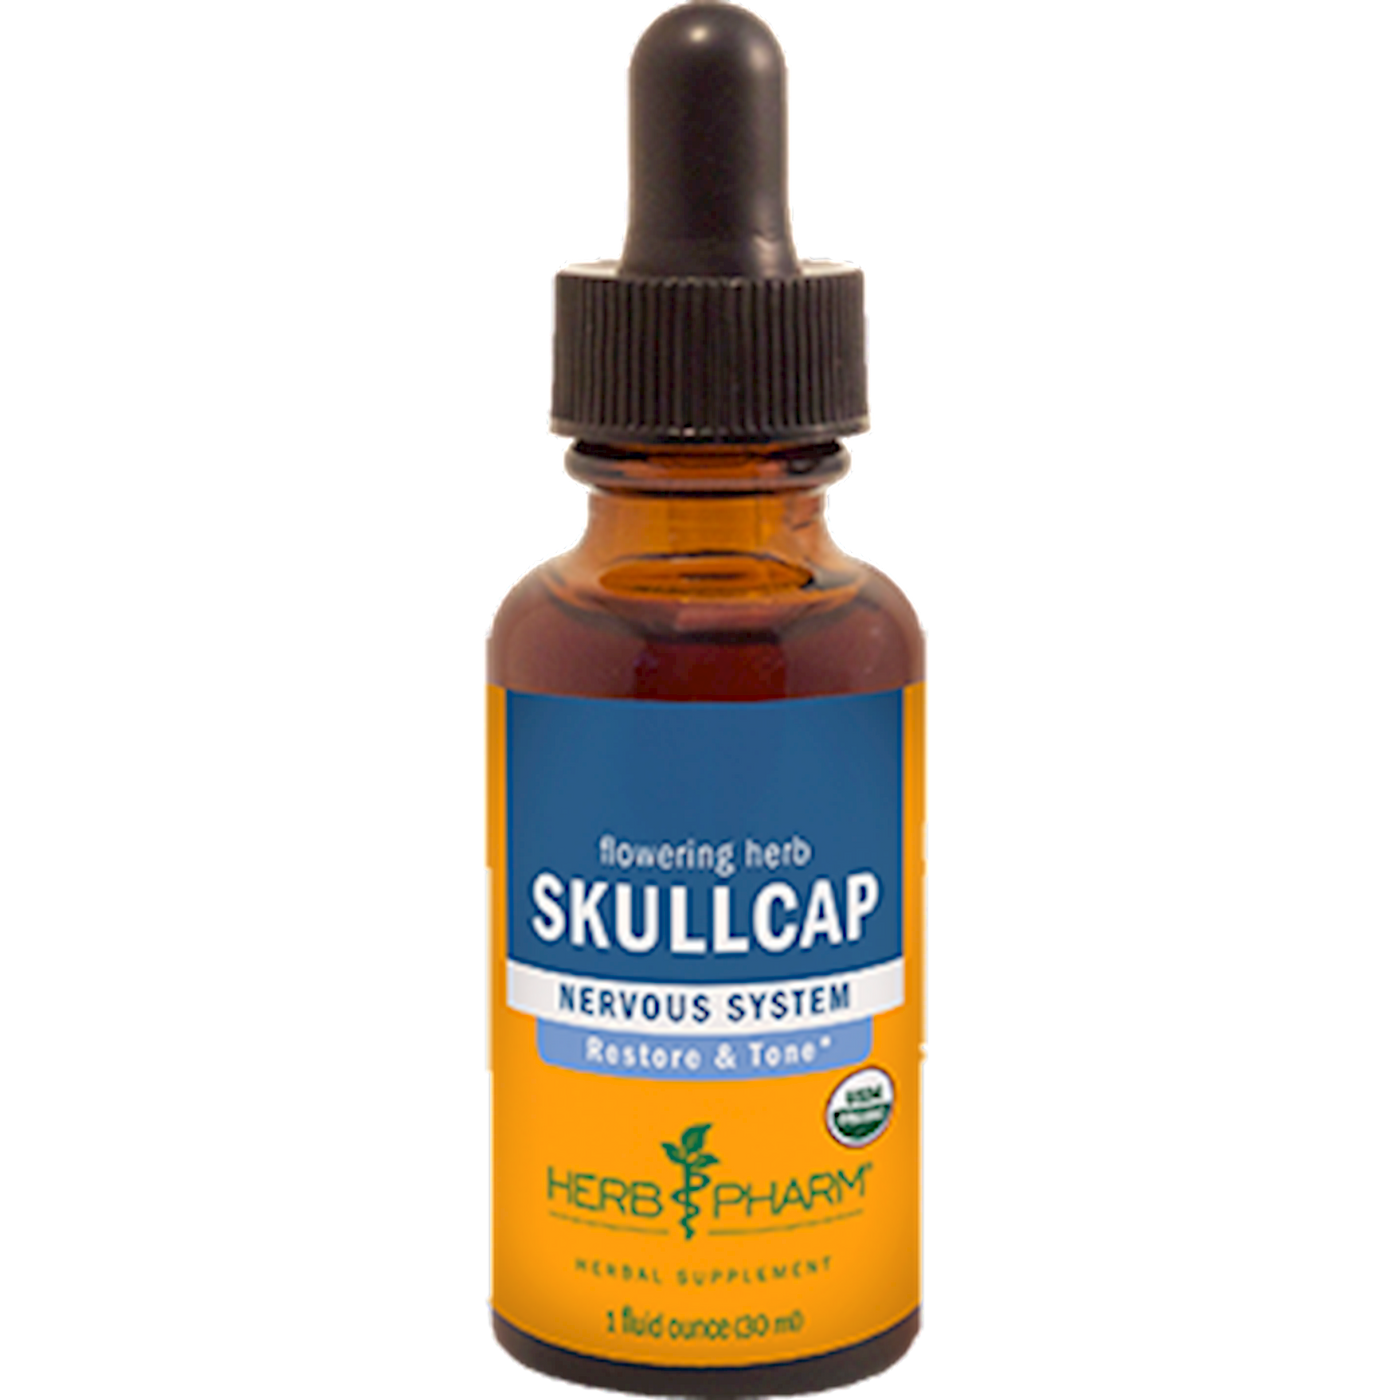 Skullcap  Curated Wellness